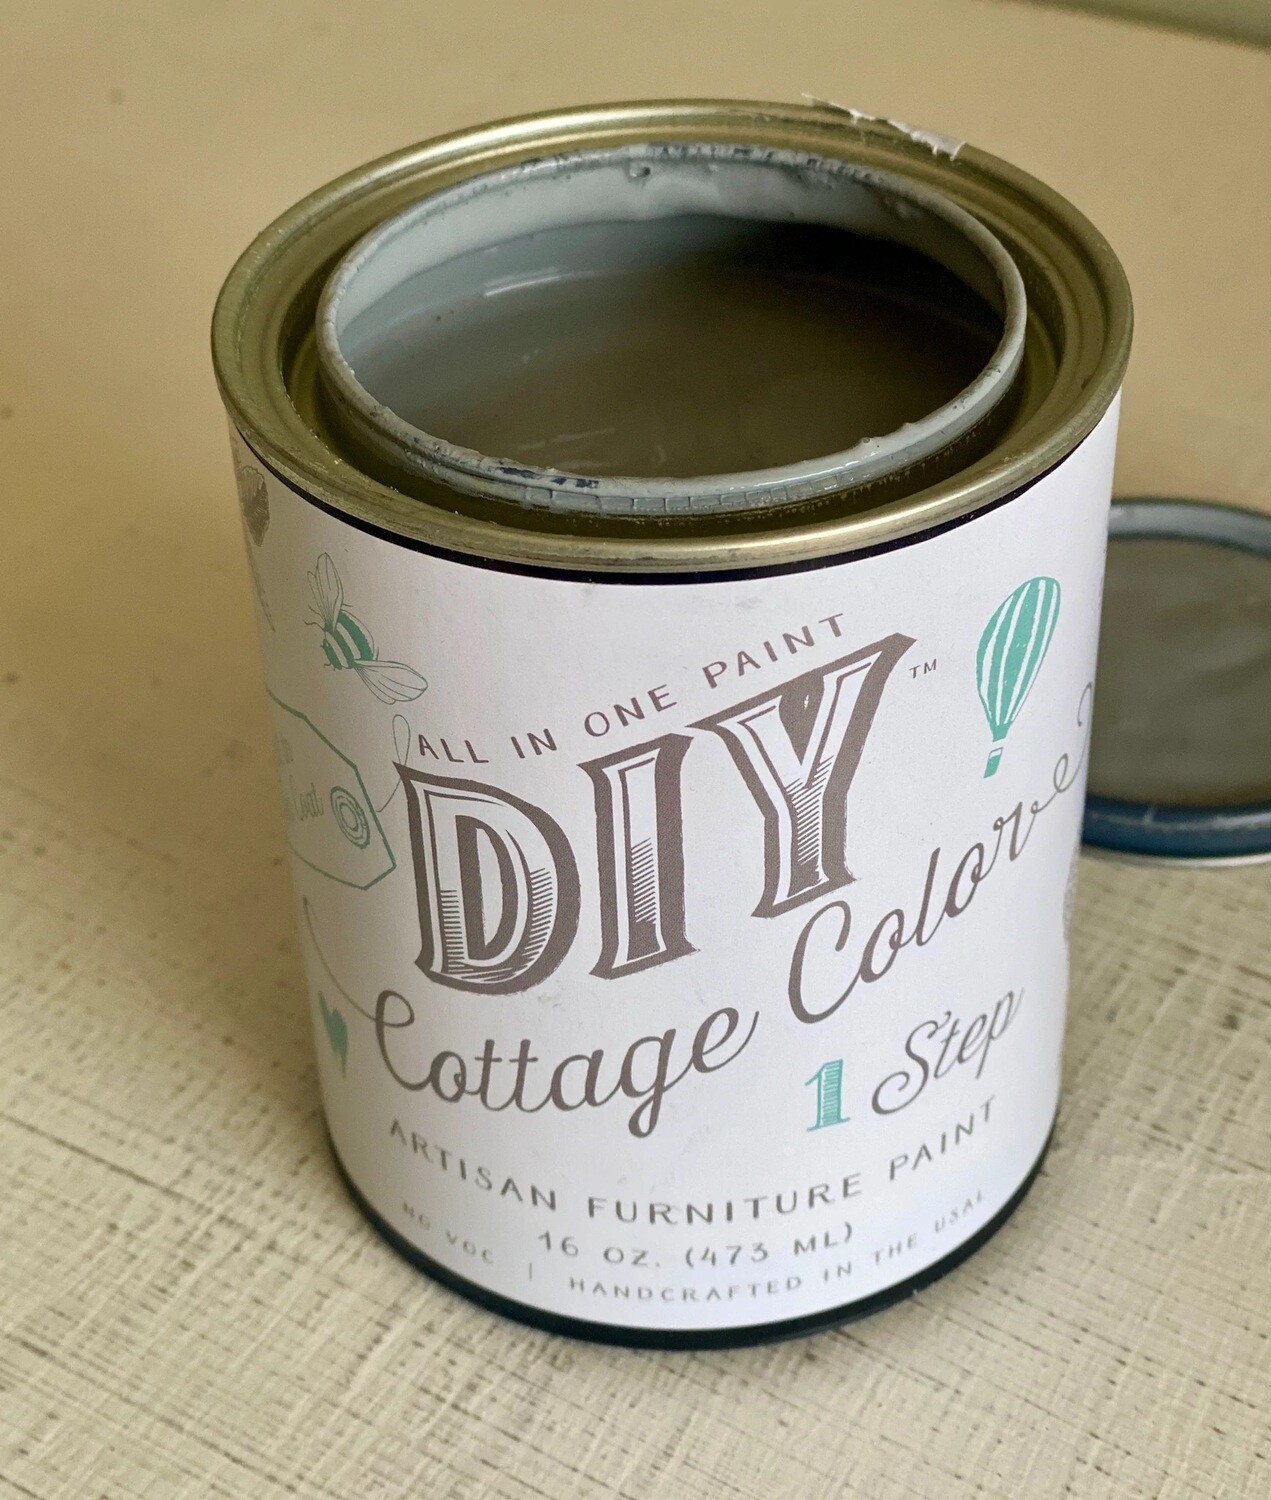 DIY Cottage Color Grey Skies by DIY Paint Co